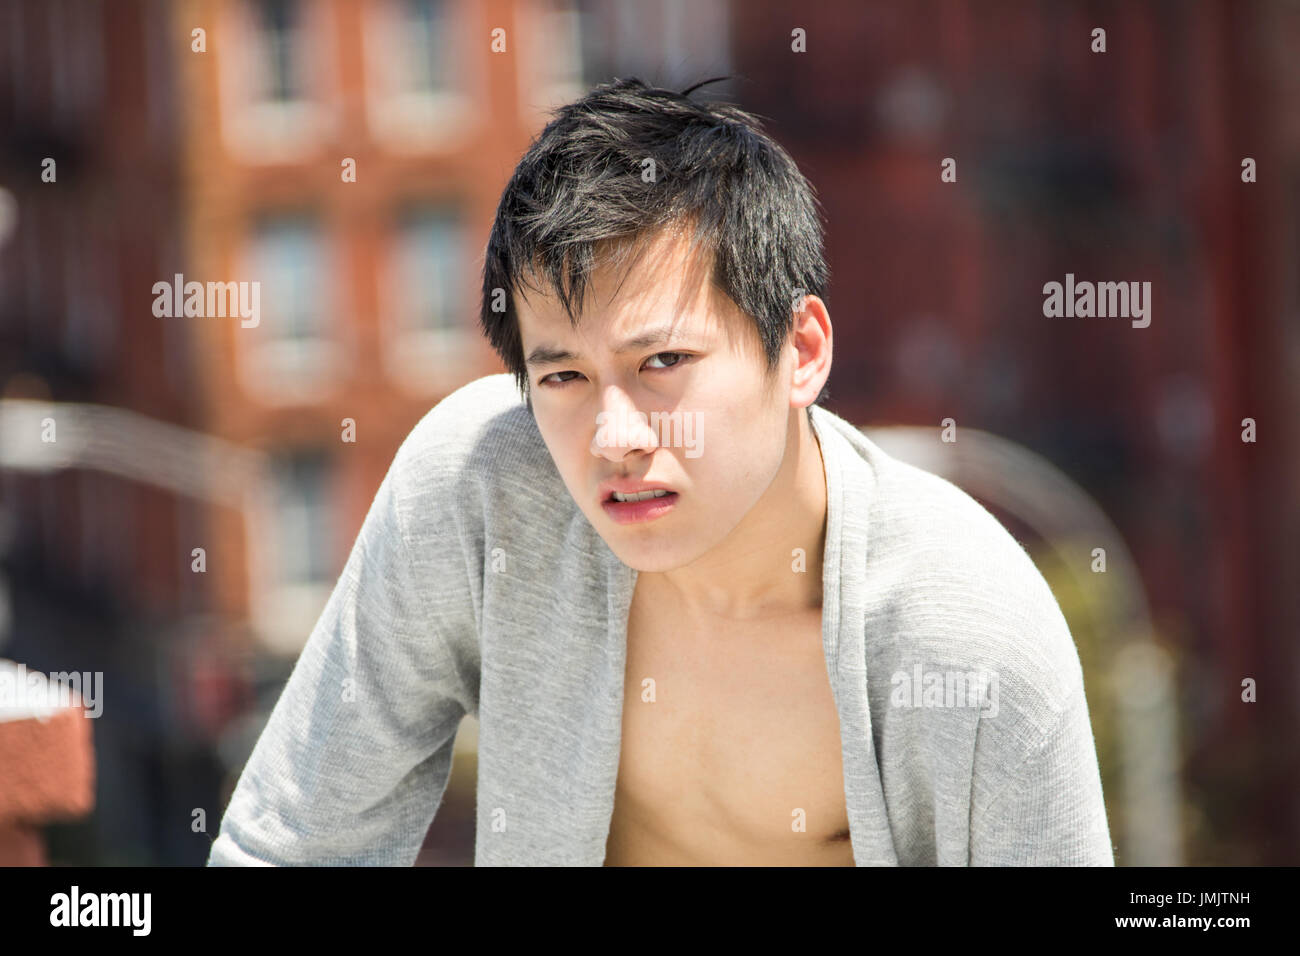 Cameron Koo, Hong Kong chinesische Studenten in Manhattan, New York City, USA Stockfoto